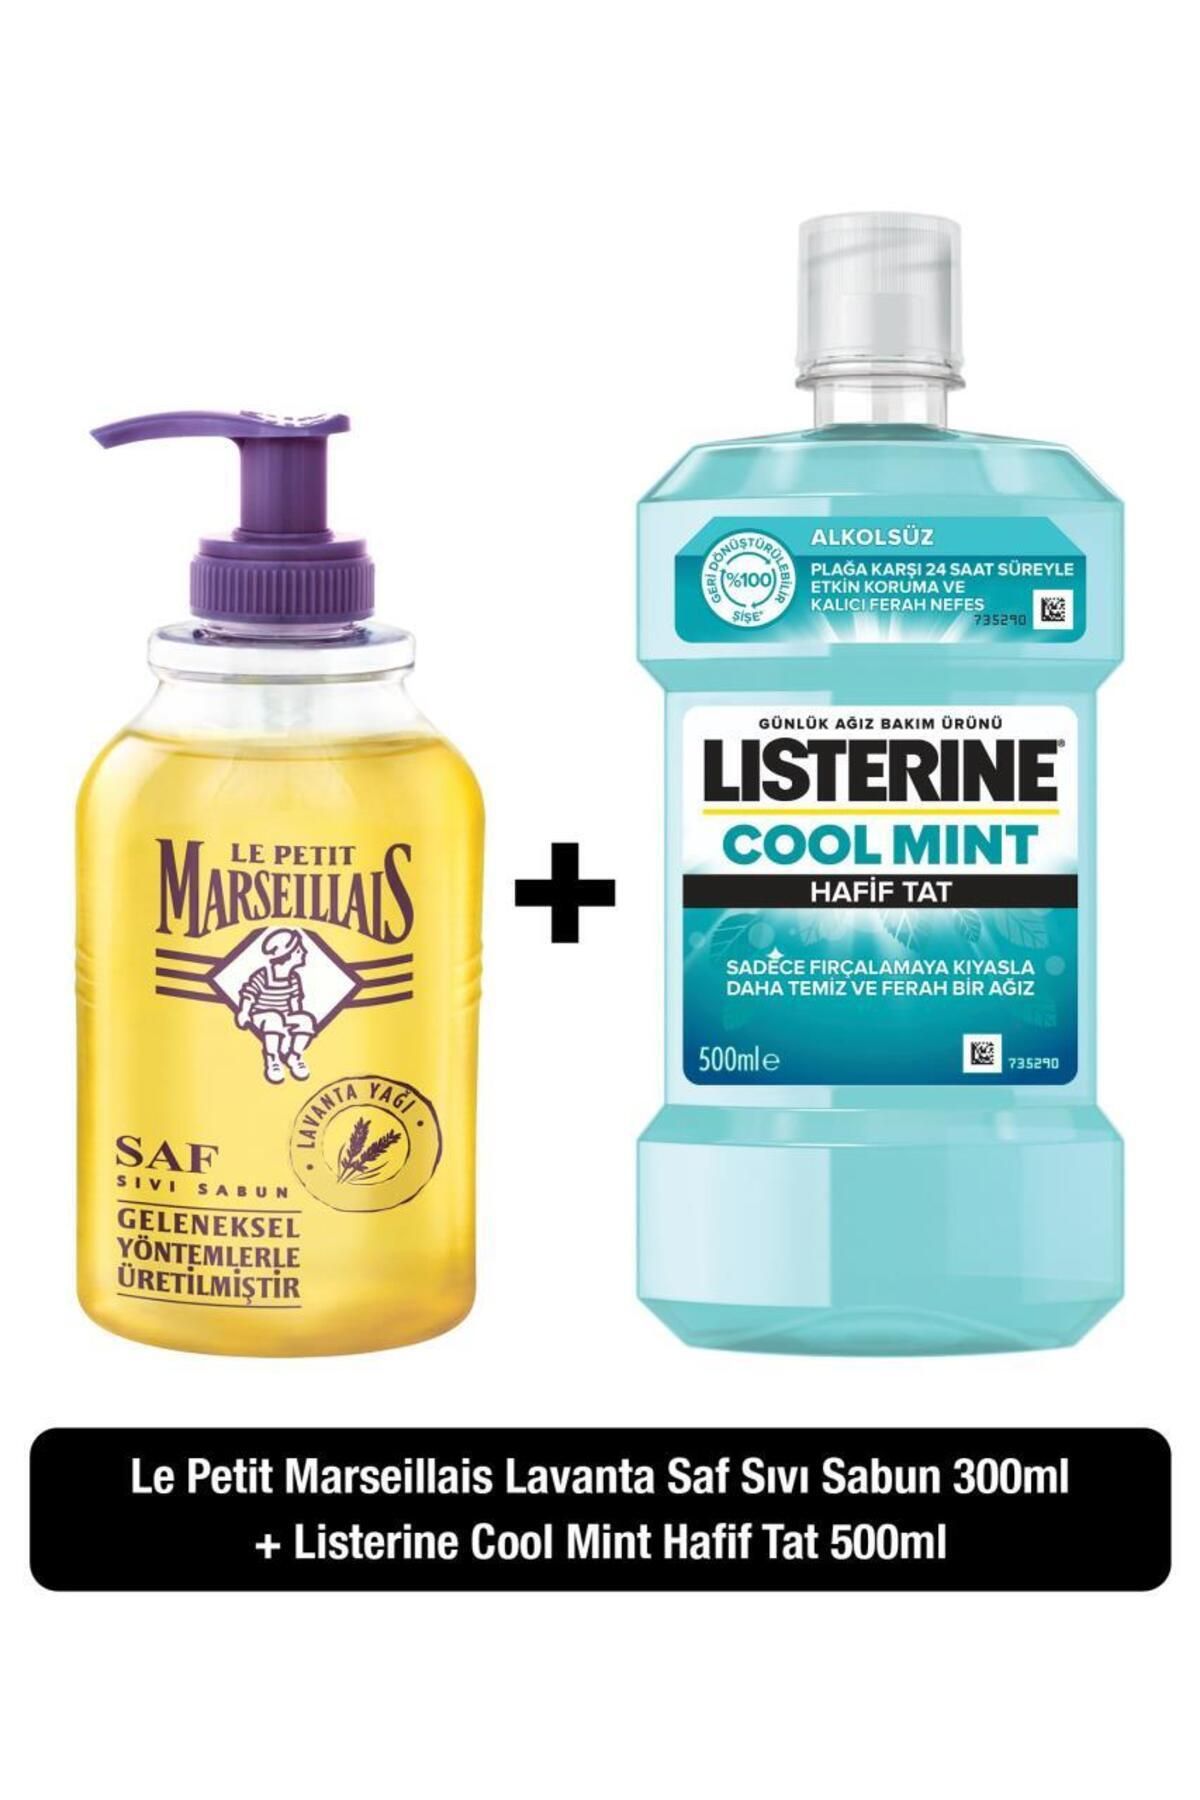 Listerine Cool Mint Hafif Tat Ağız Bakım Suyu 500 ml Le Petit Marseillais Lavanta Balı Sıvı Sabun